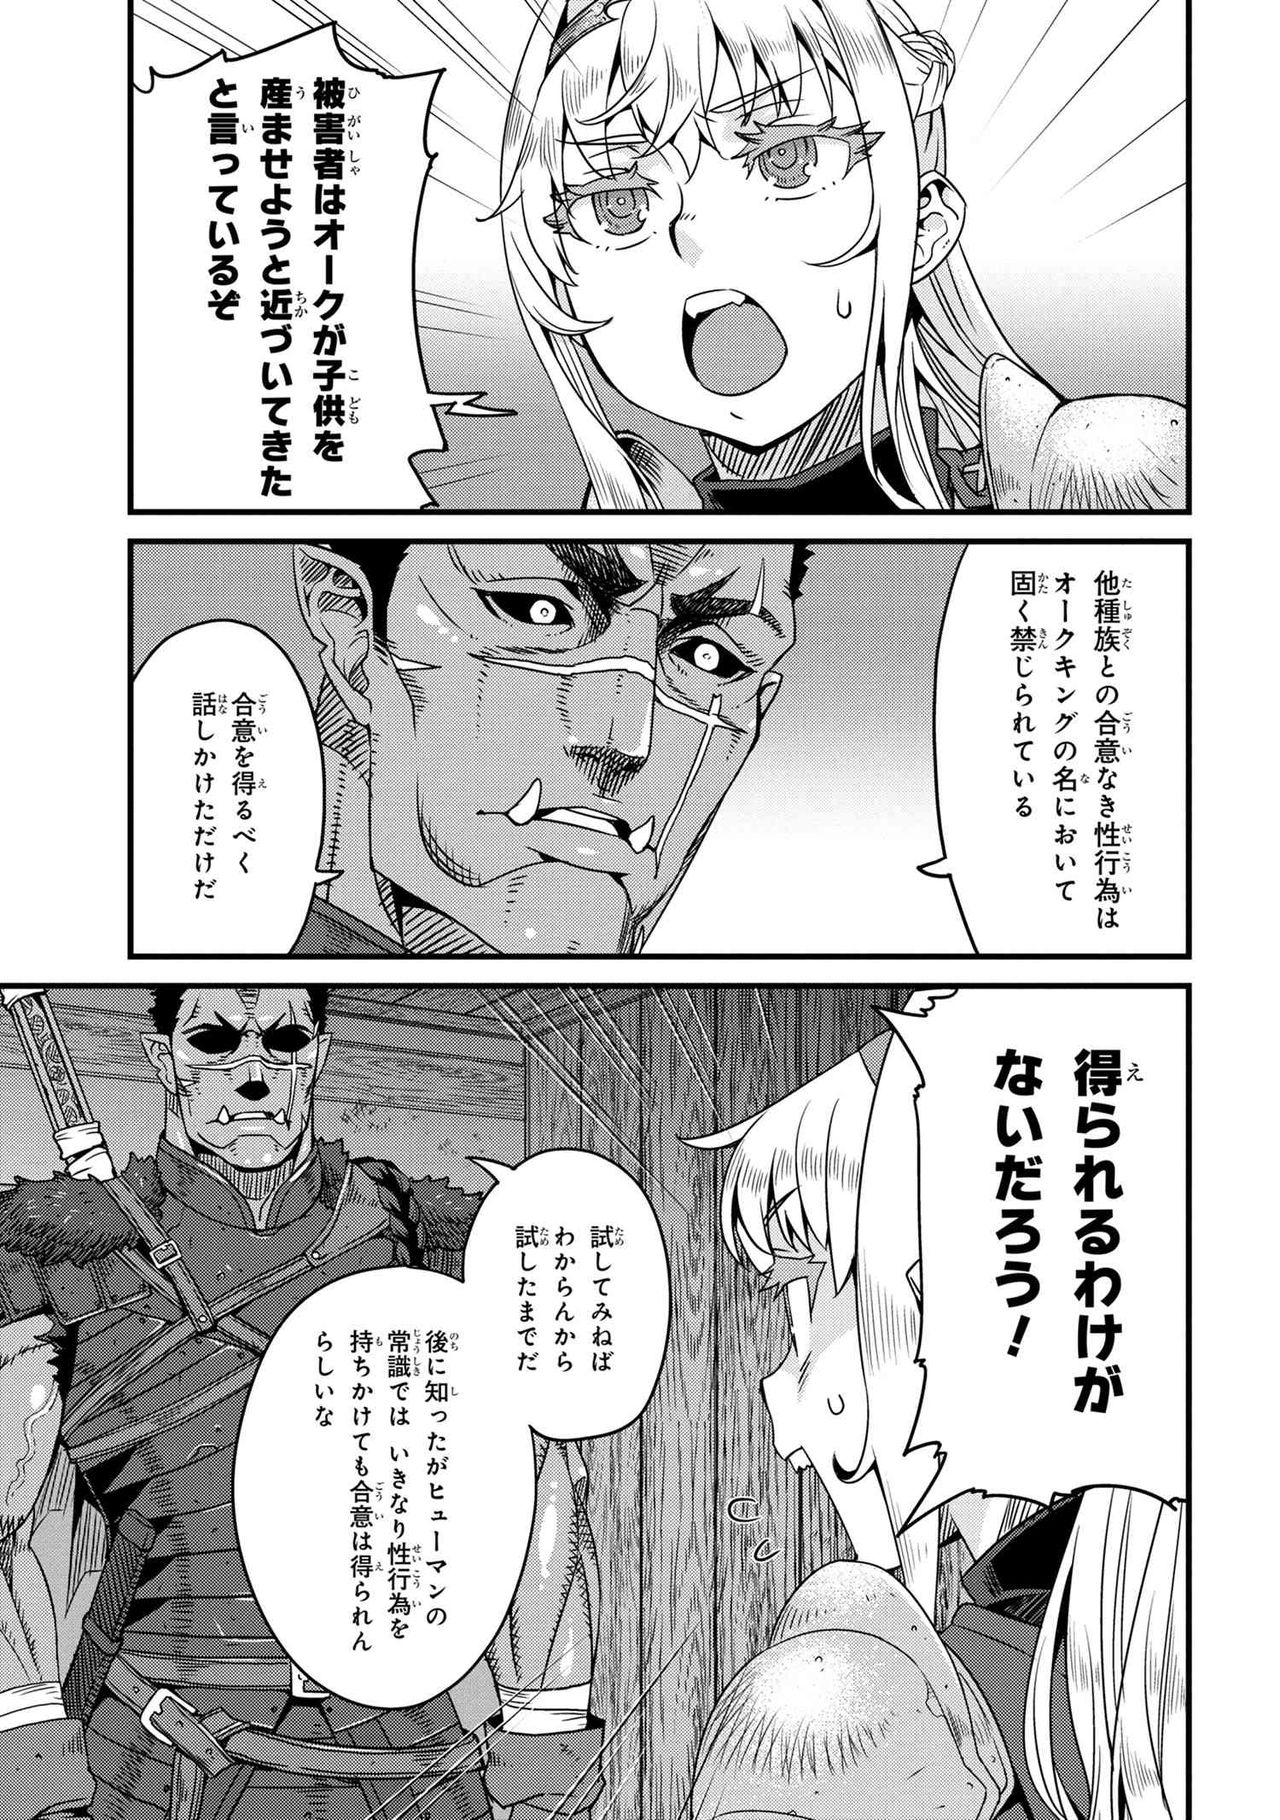 [Tsubakuro_U] Orc Hero Story - Discovery Chronicles Ch.2-1 (COMIC YAUP 2021-03-25) 6